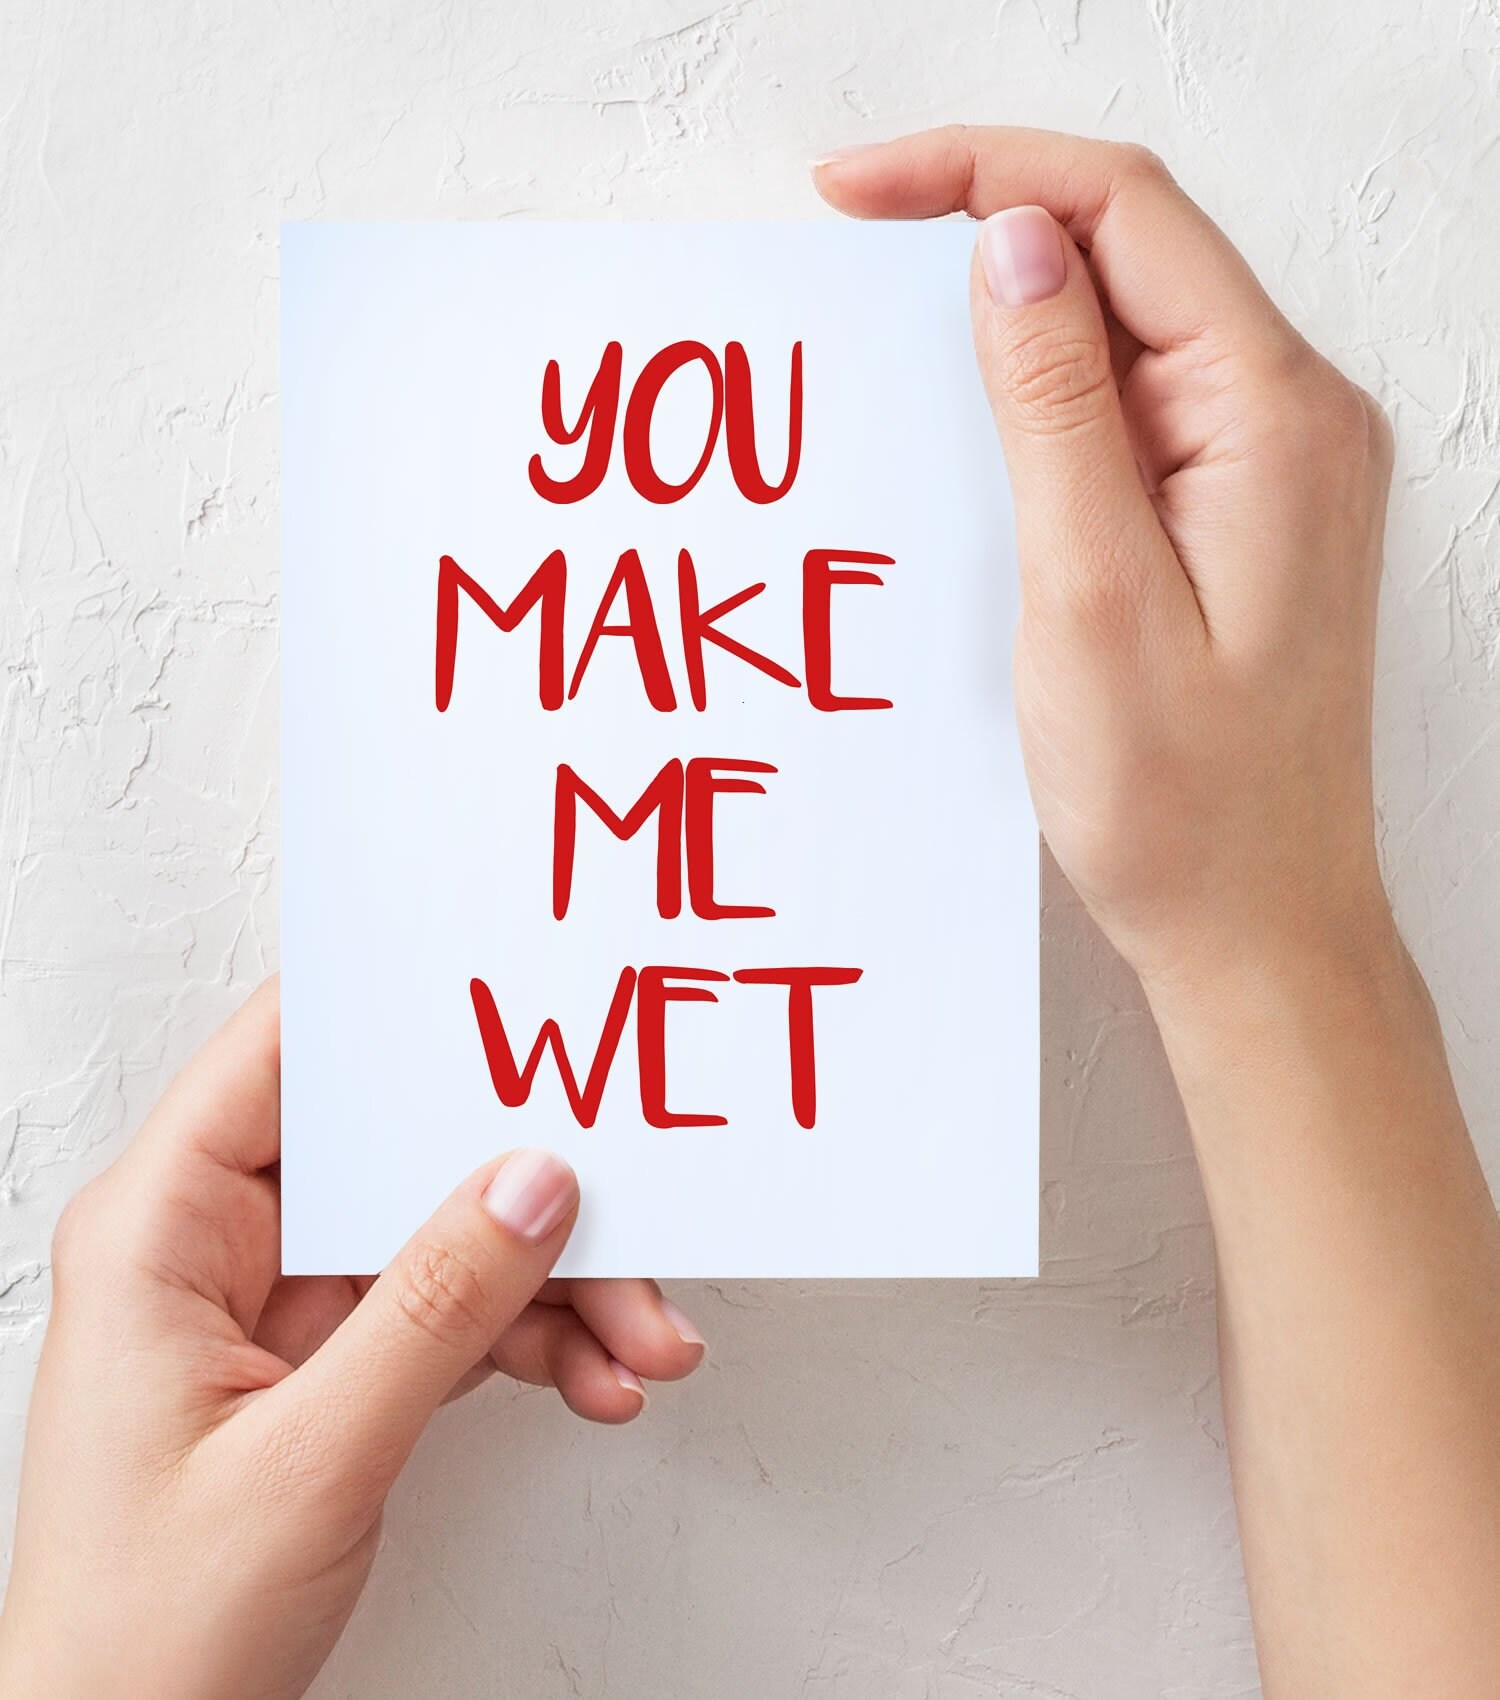 dhiman basak reccomend U Make Me Wet